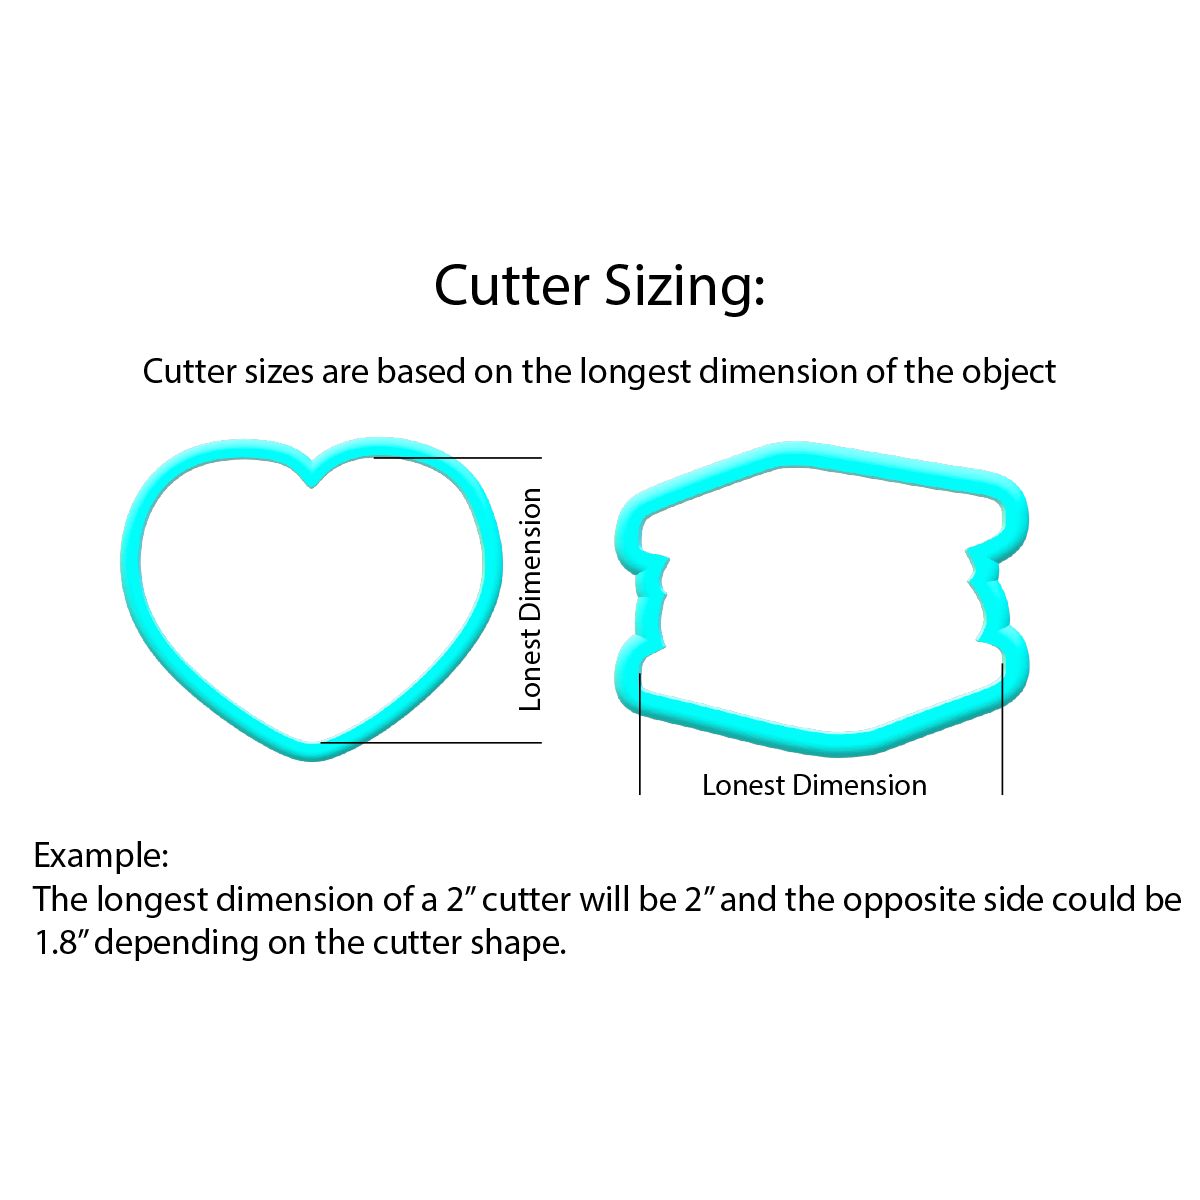 Leprechaun Couple Cookie Cutter | STL File